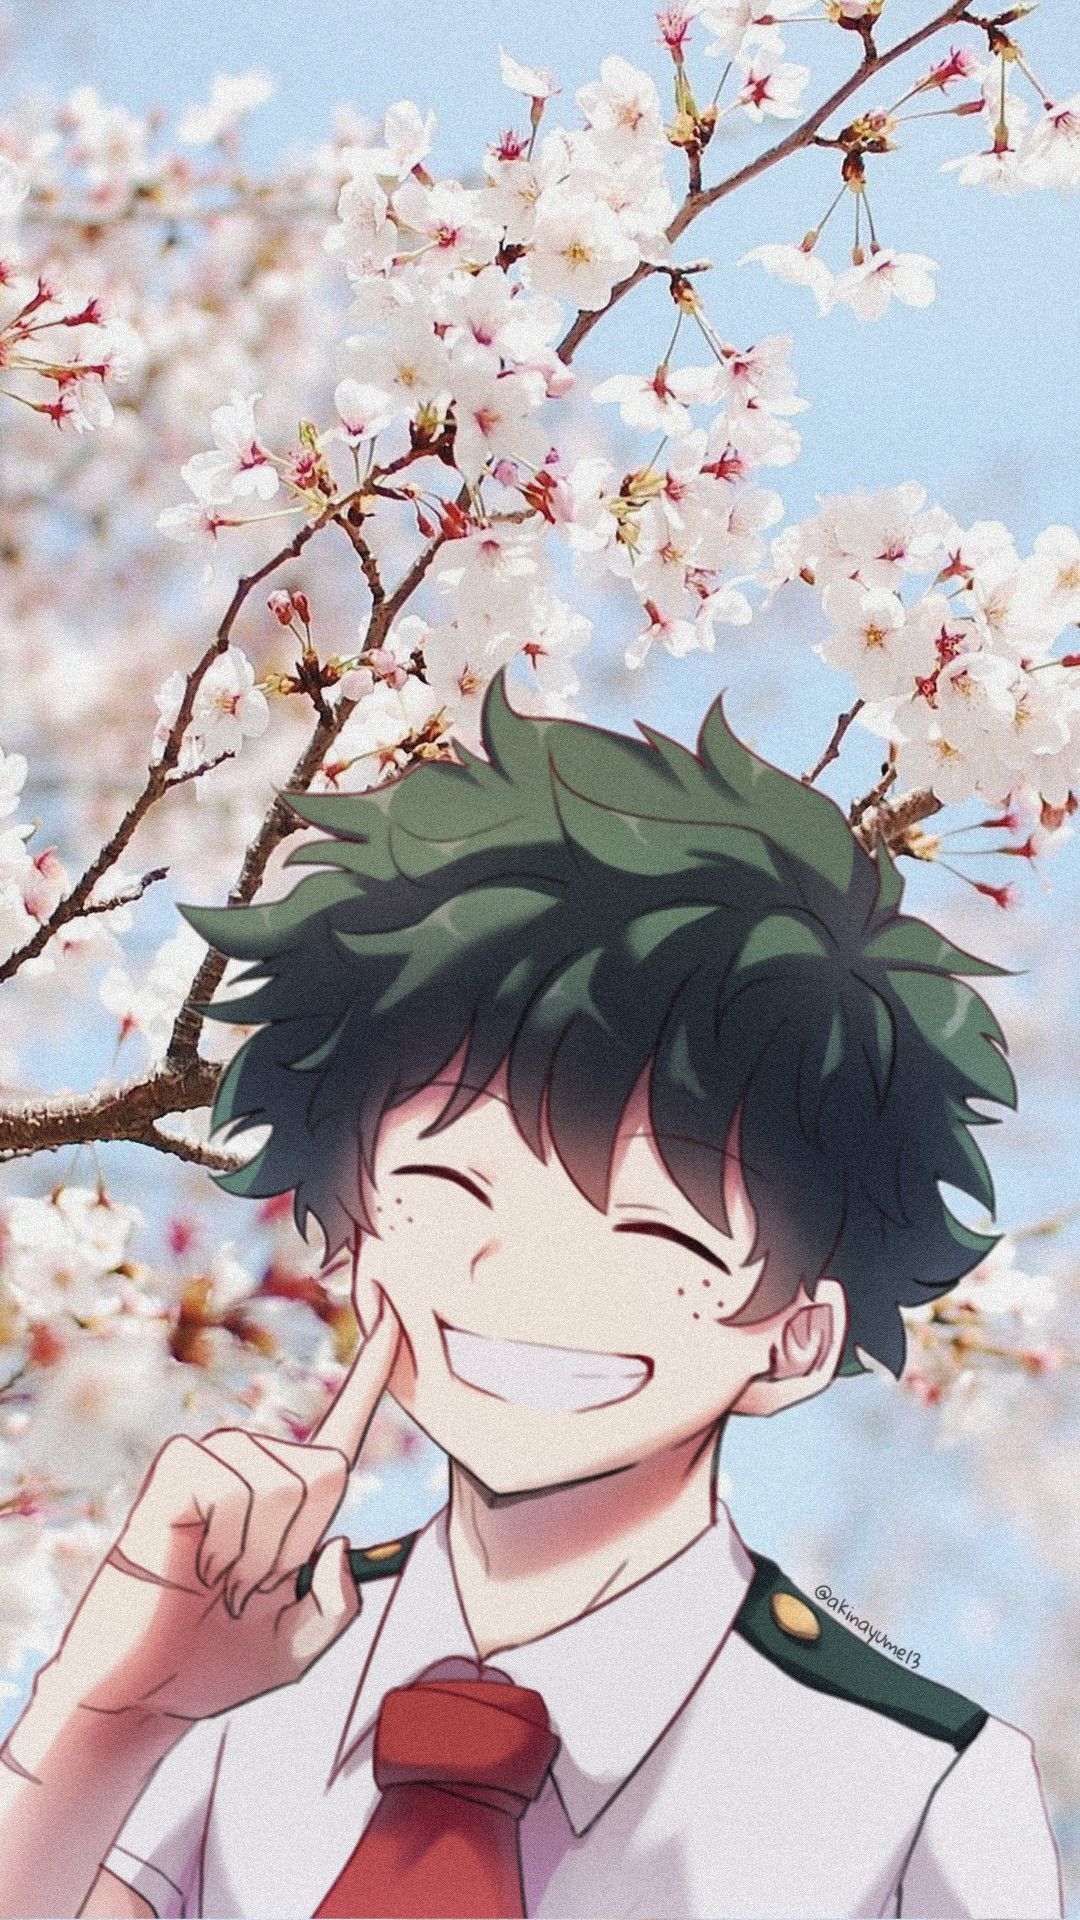 bokunoheroacademia #bnha #midoriyaizuku #midoriya #deku #spring #kawaii #anime #animeboy #animewallp. Anime background wallpaper, Kawaii anime, Anime wallpaper